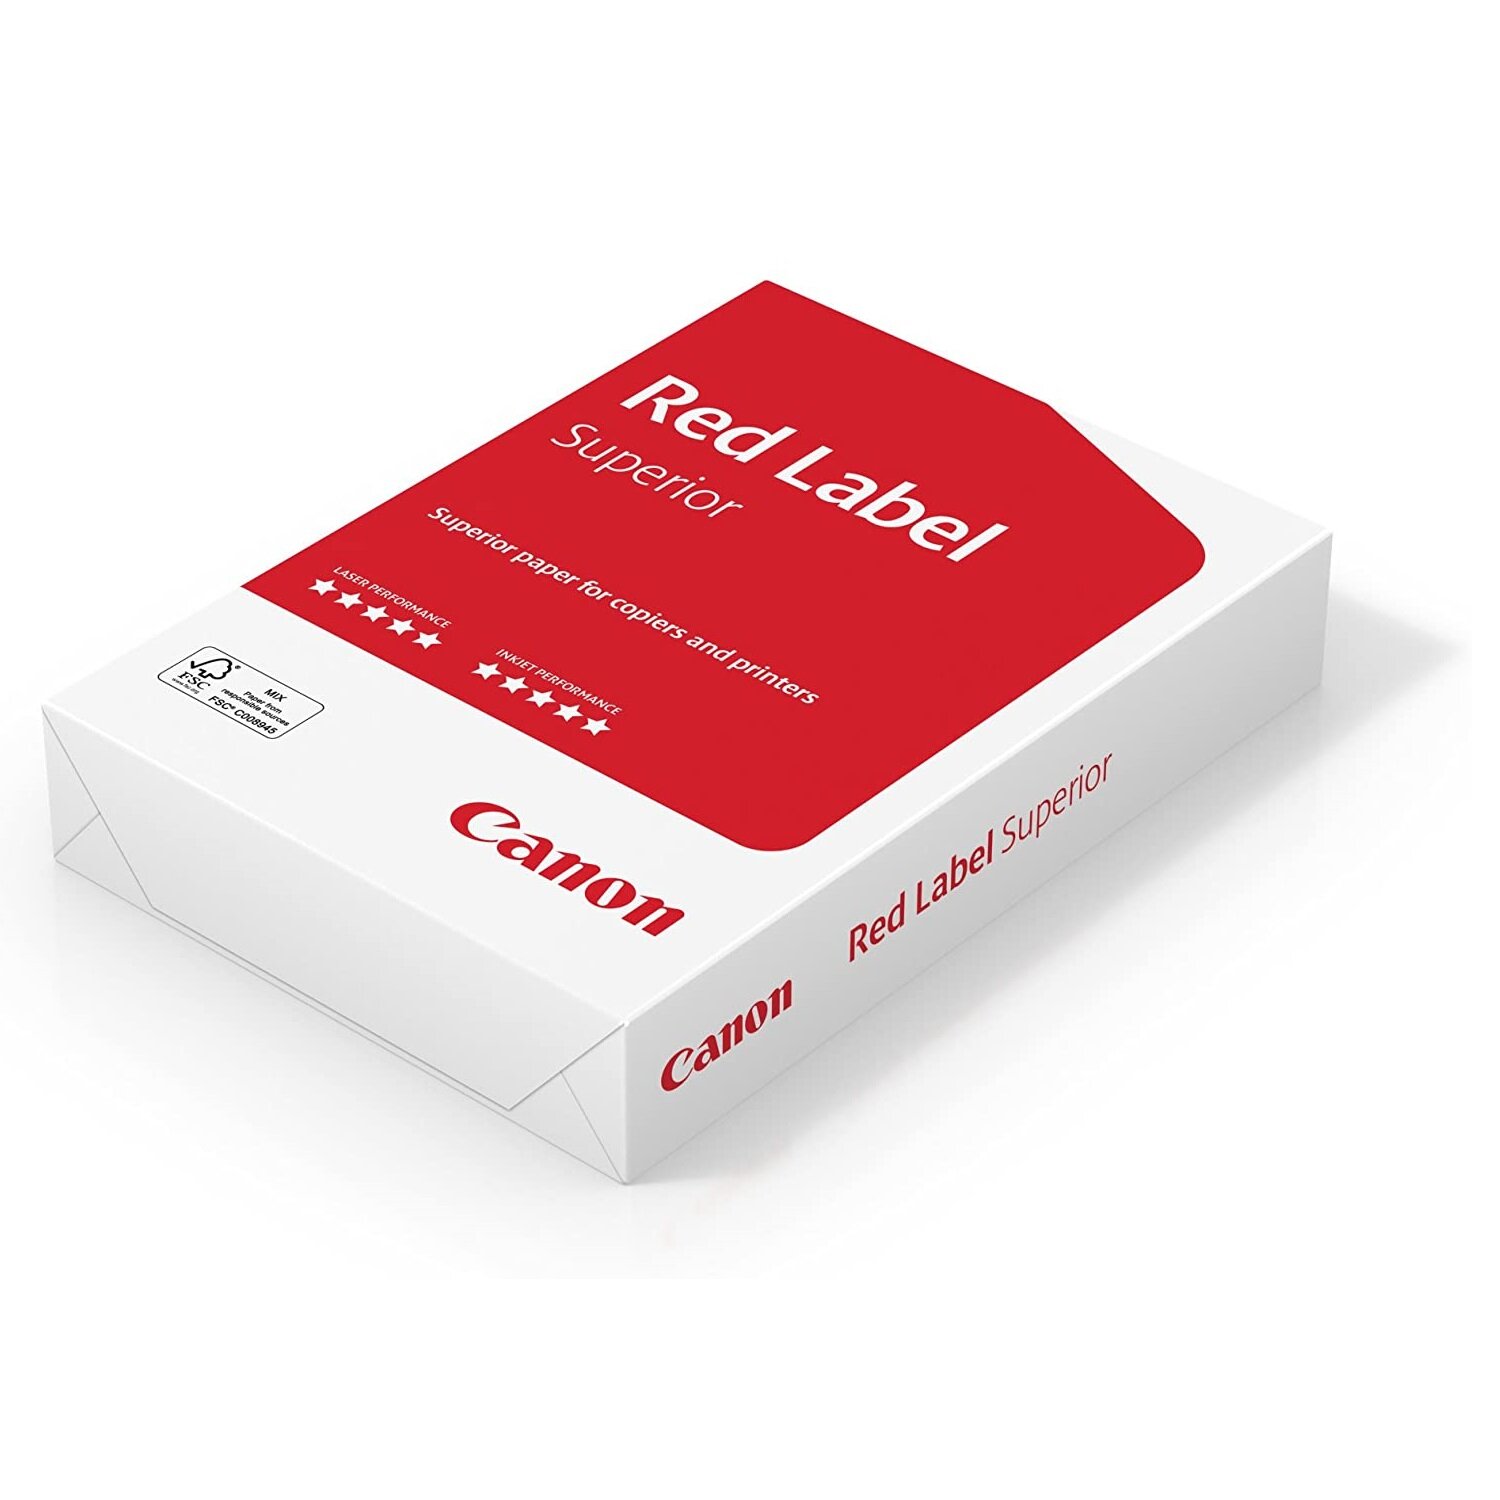 1 пач. Бумага Decoromir для офисной техники Canon Red Label Professional (А4, марка A+, 80 г/кв.м, 500 листов)